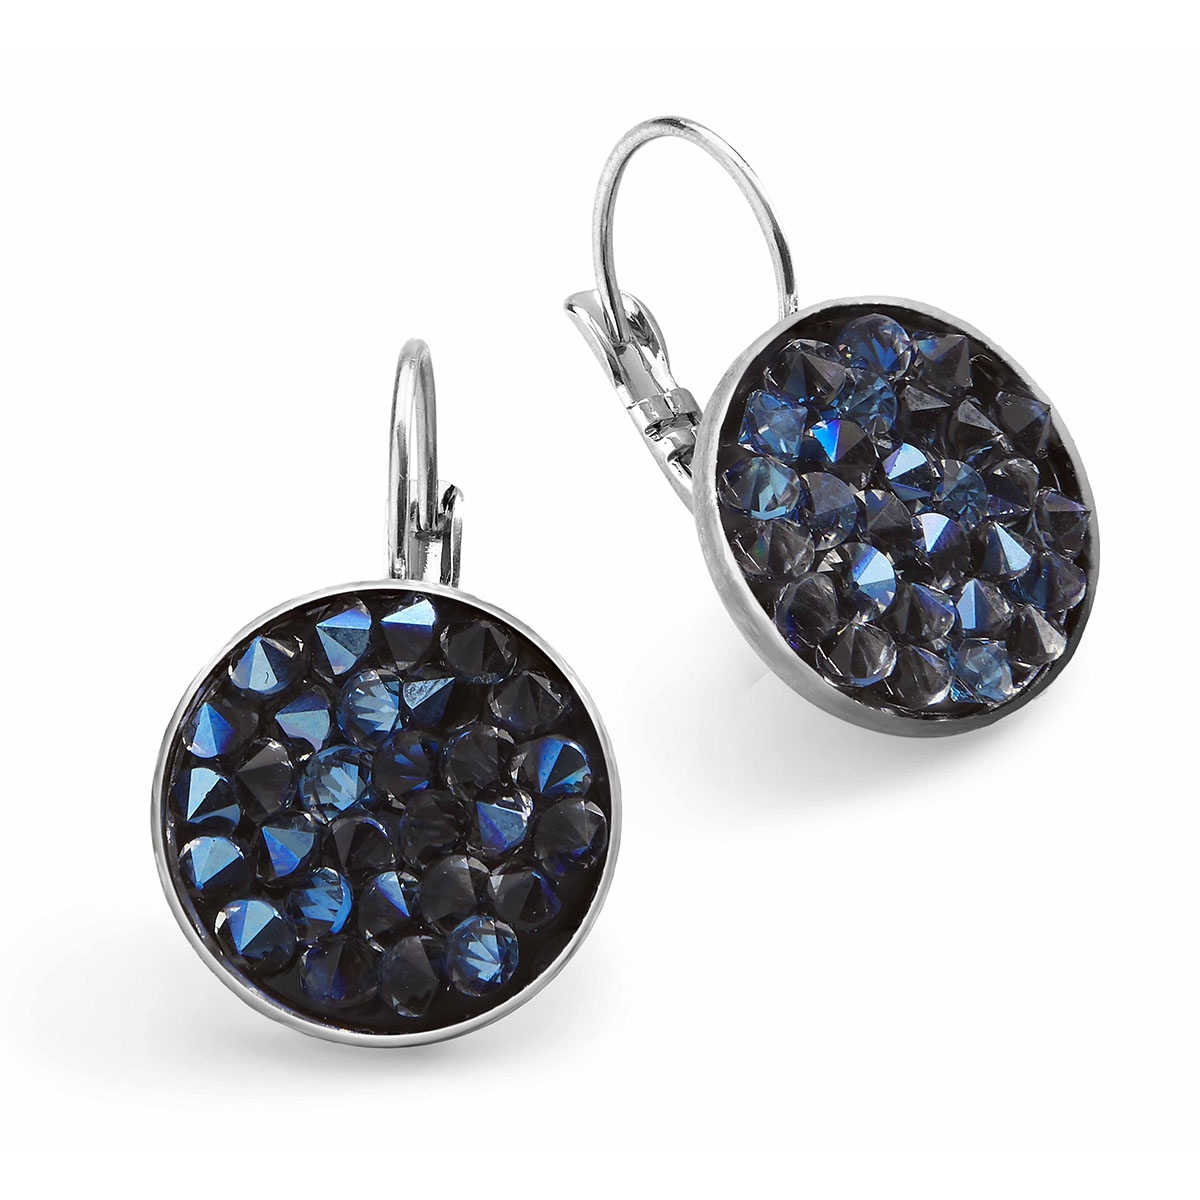 SEA Smadar Eliasaf Silver-Plated Blue Swarovski Earrings - 1